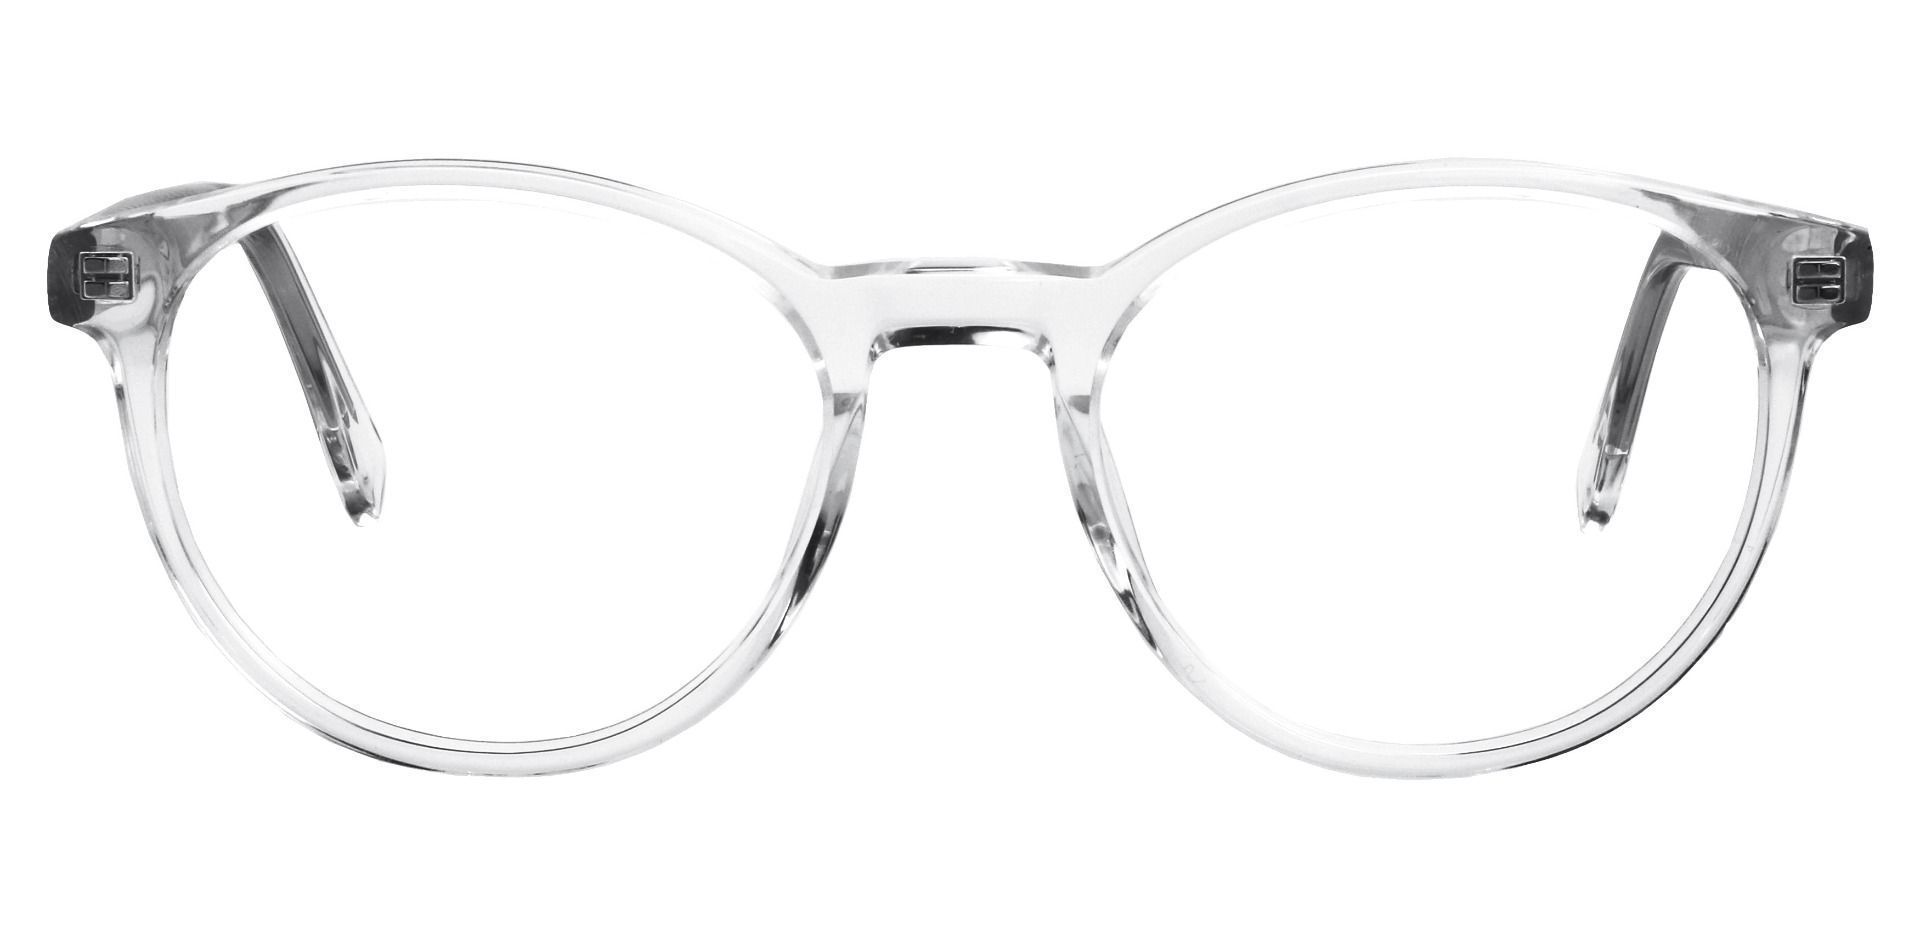 Stellar Oval Prescription Glasses - Clear